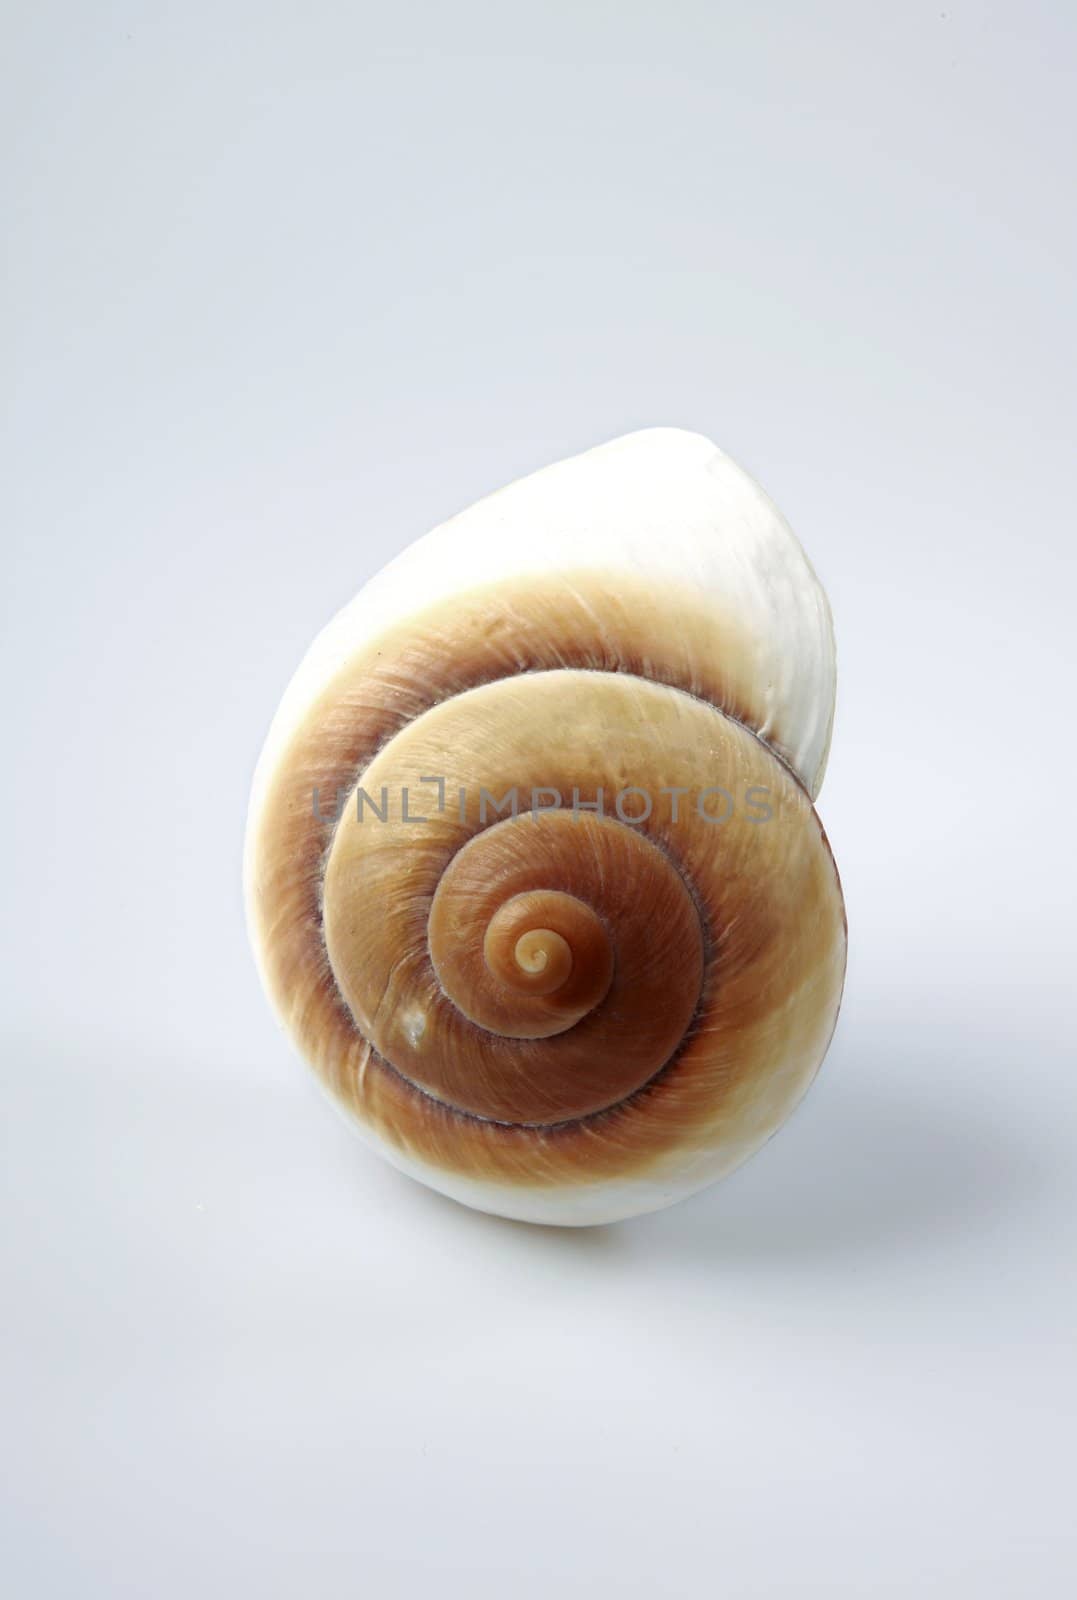 nautilus shell by klikk